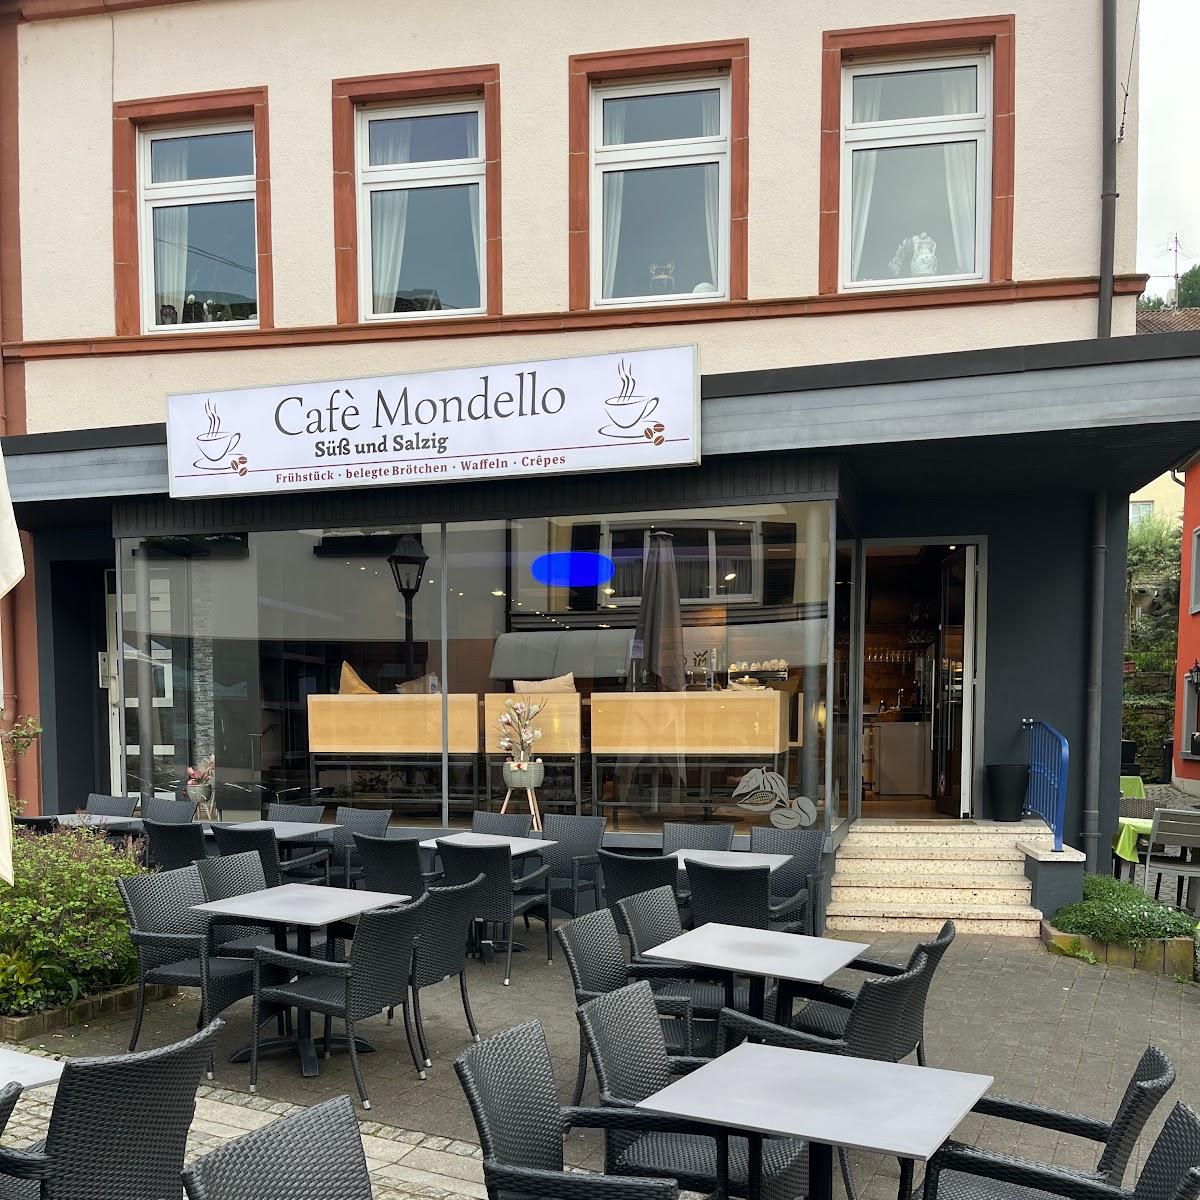 Restaurant "Cafè Mondello" in Mettlach